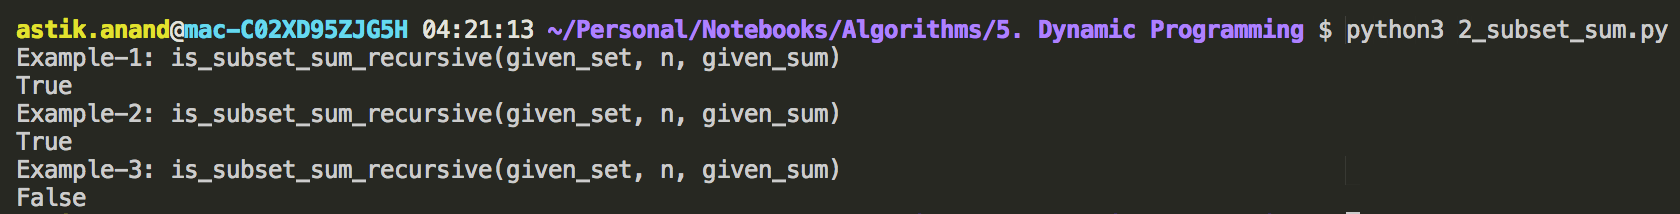 subset_sum_recursive_output